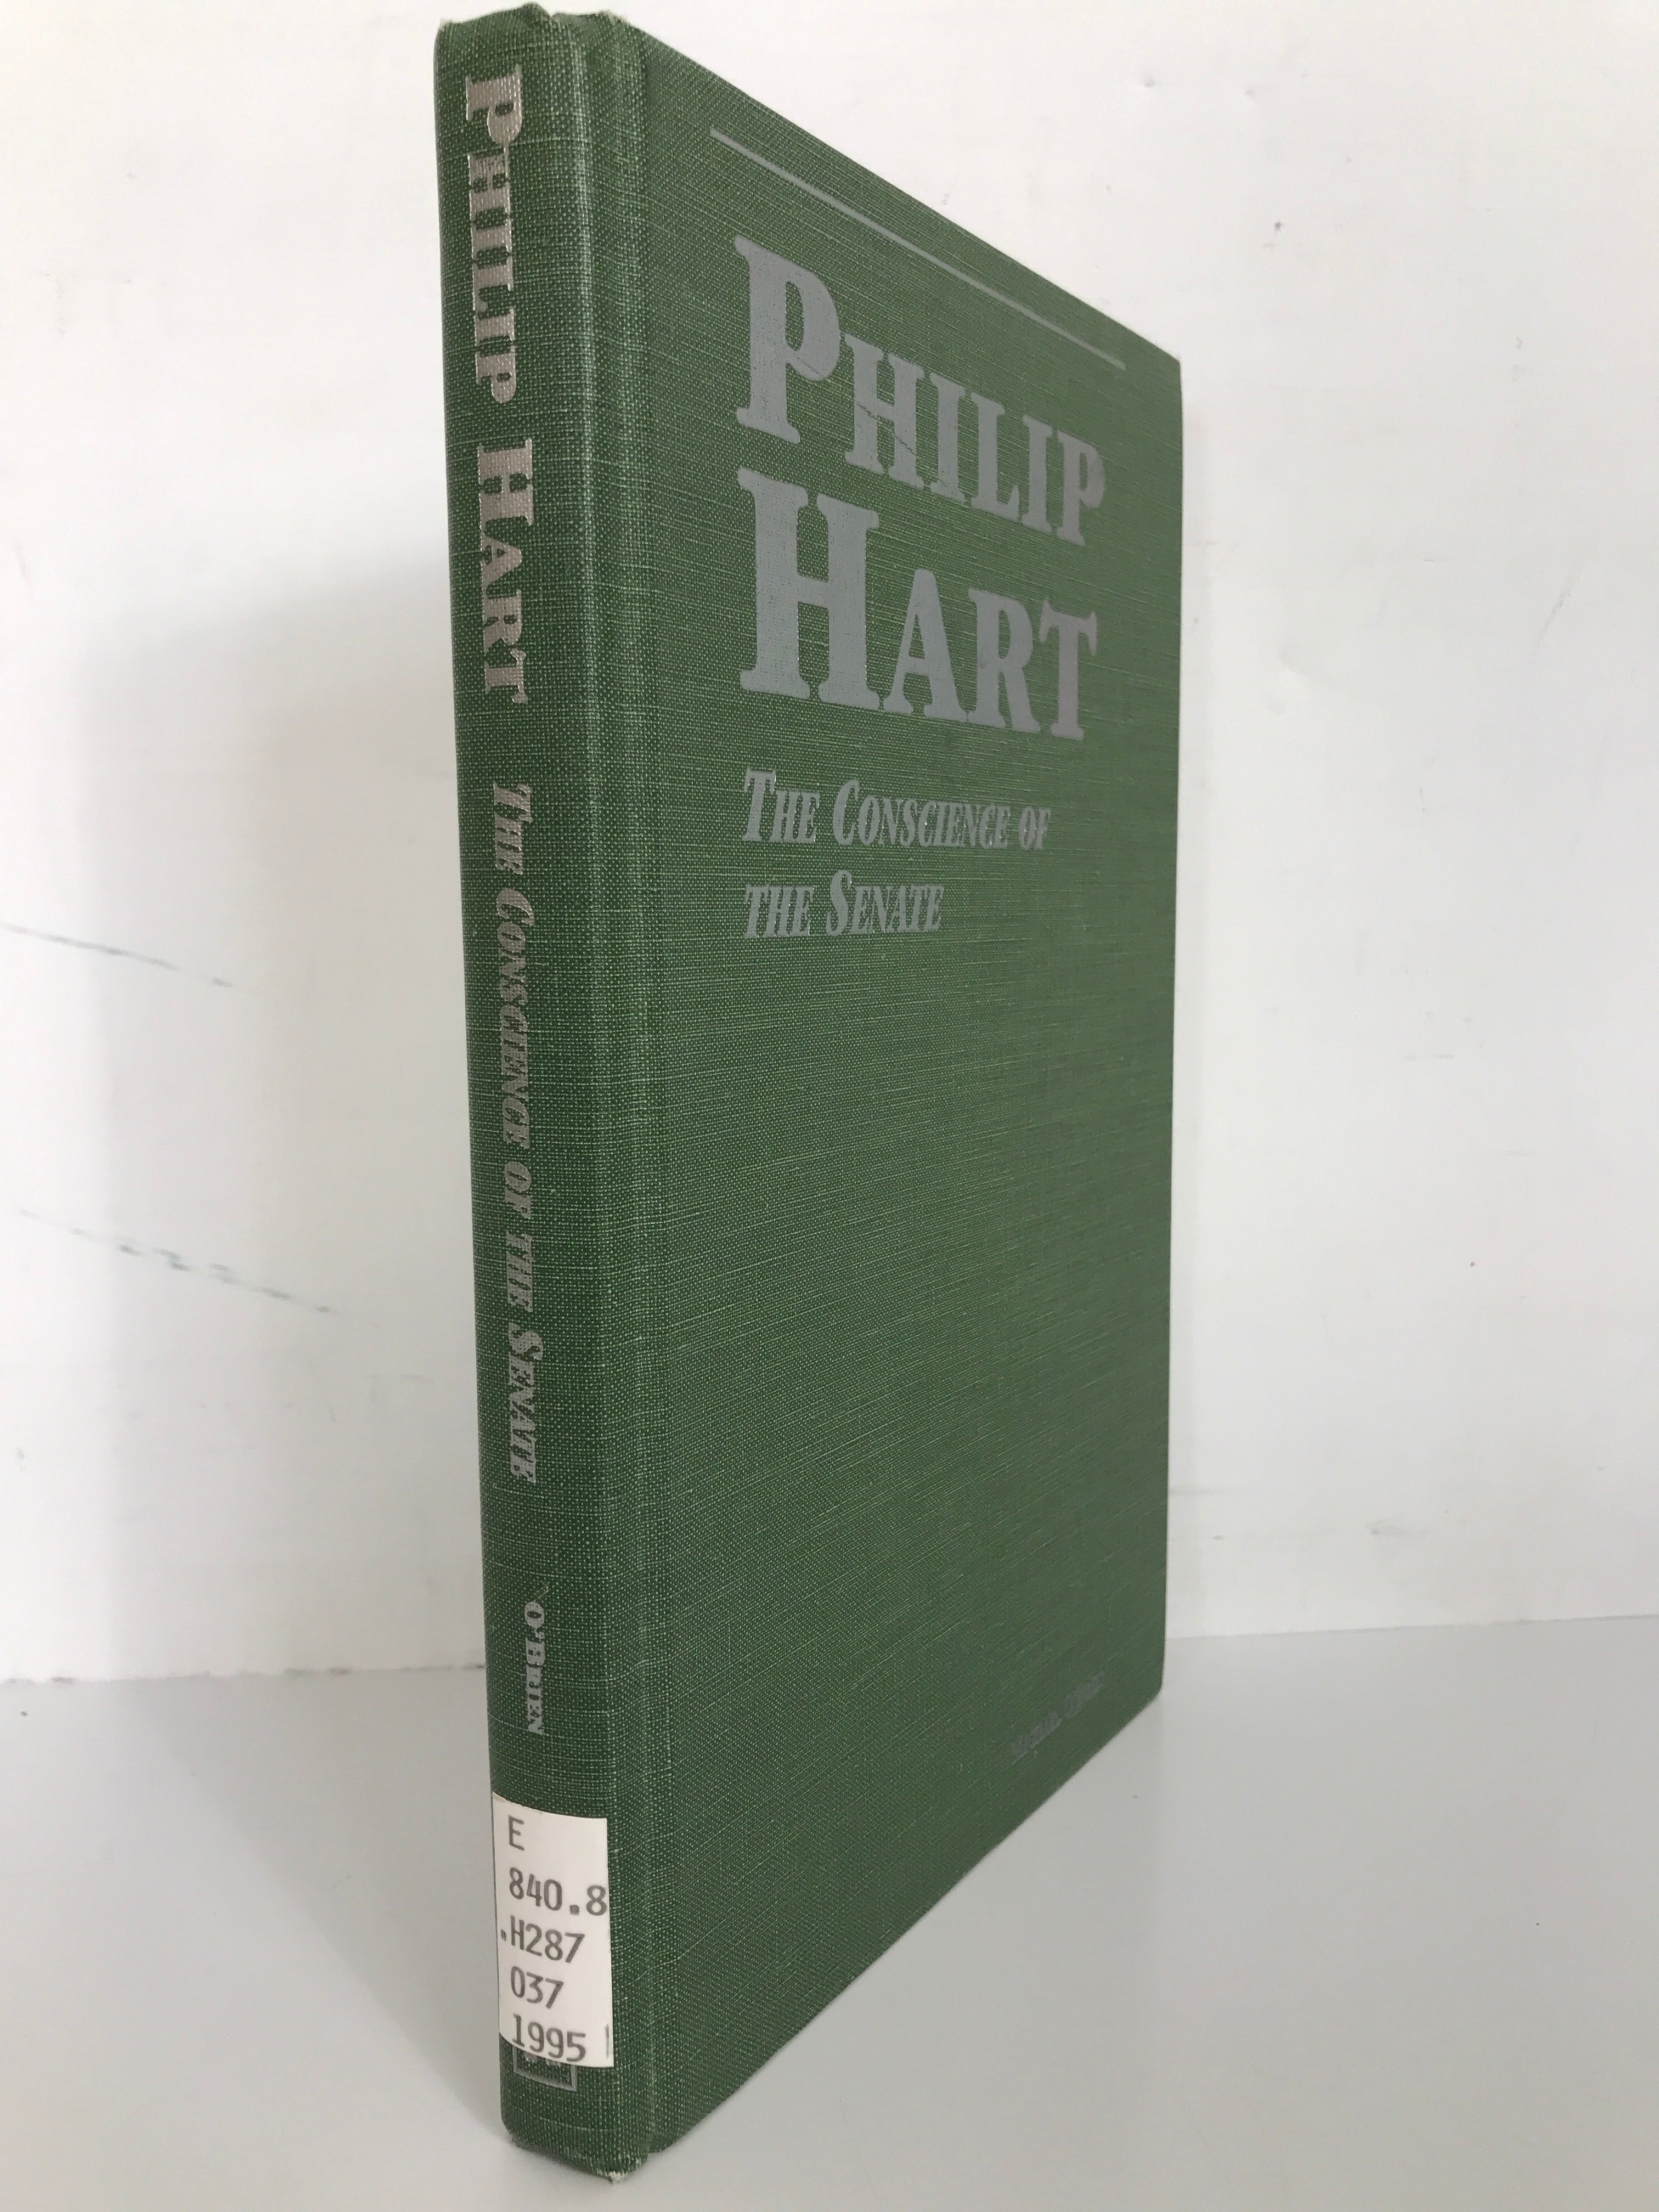 Philip Hart: The Conscience of the Senate by Michael O'Brien 1995 HC Ex-Lib